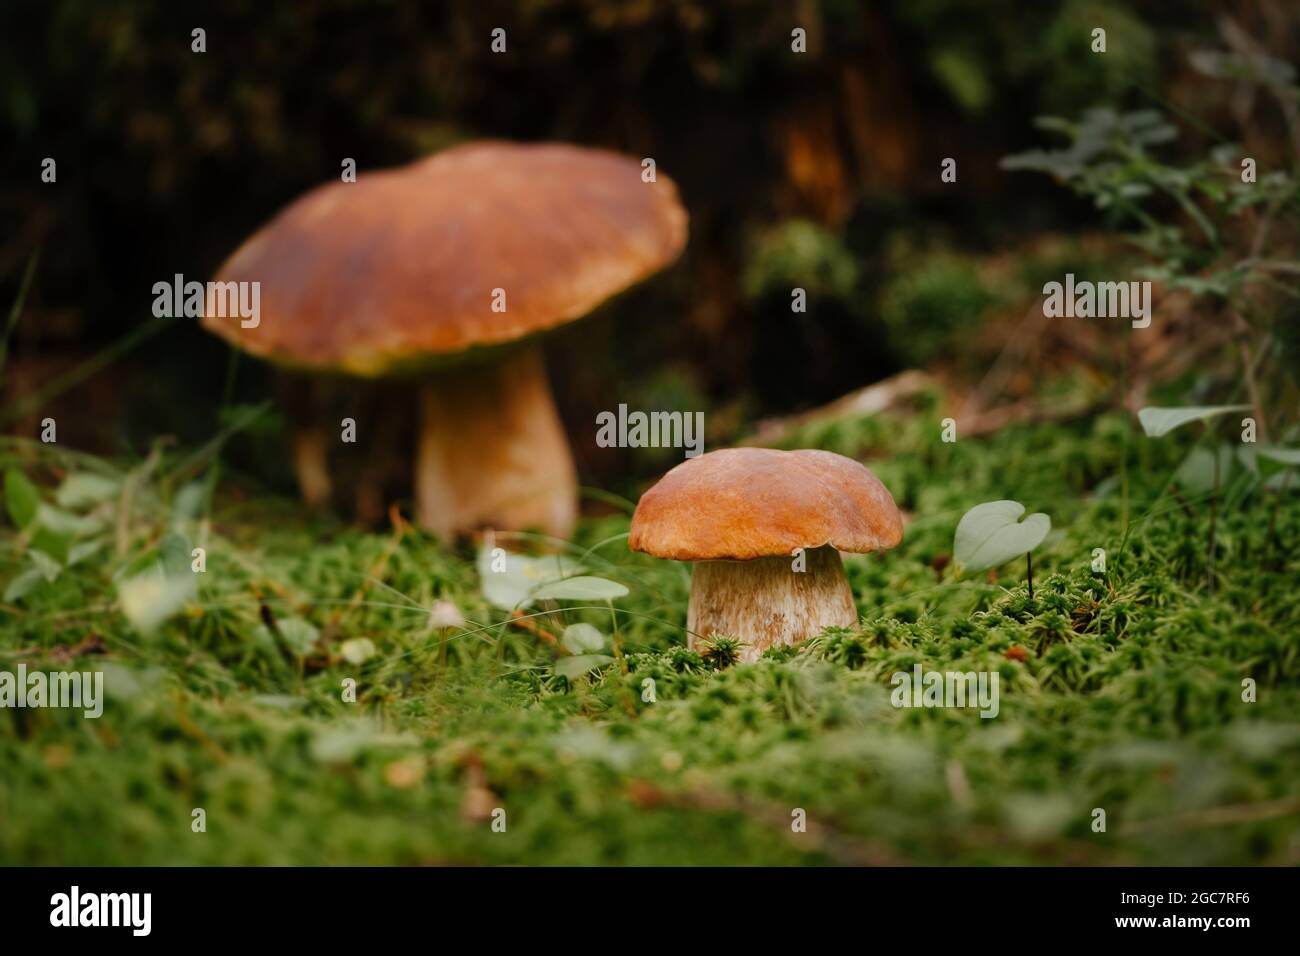 Mushroom of the genus mossy on moss Stock Photo